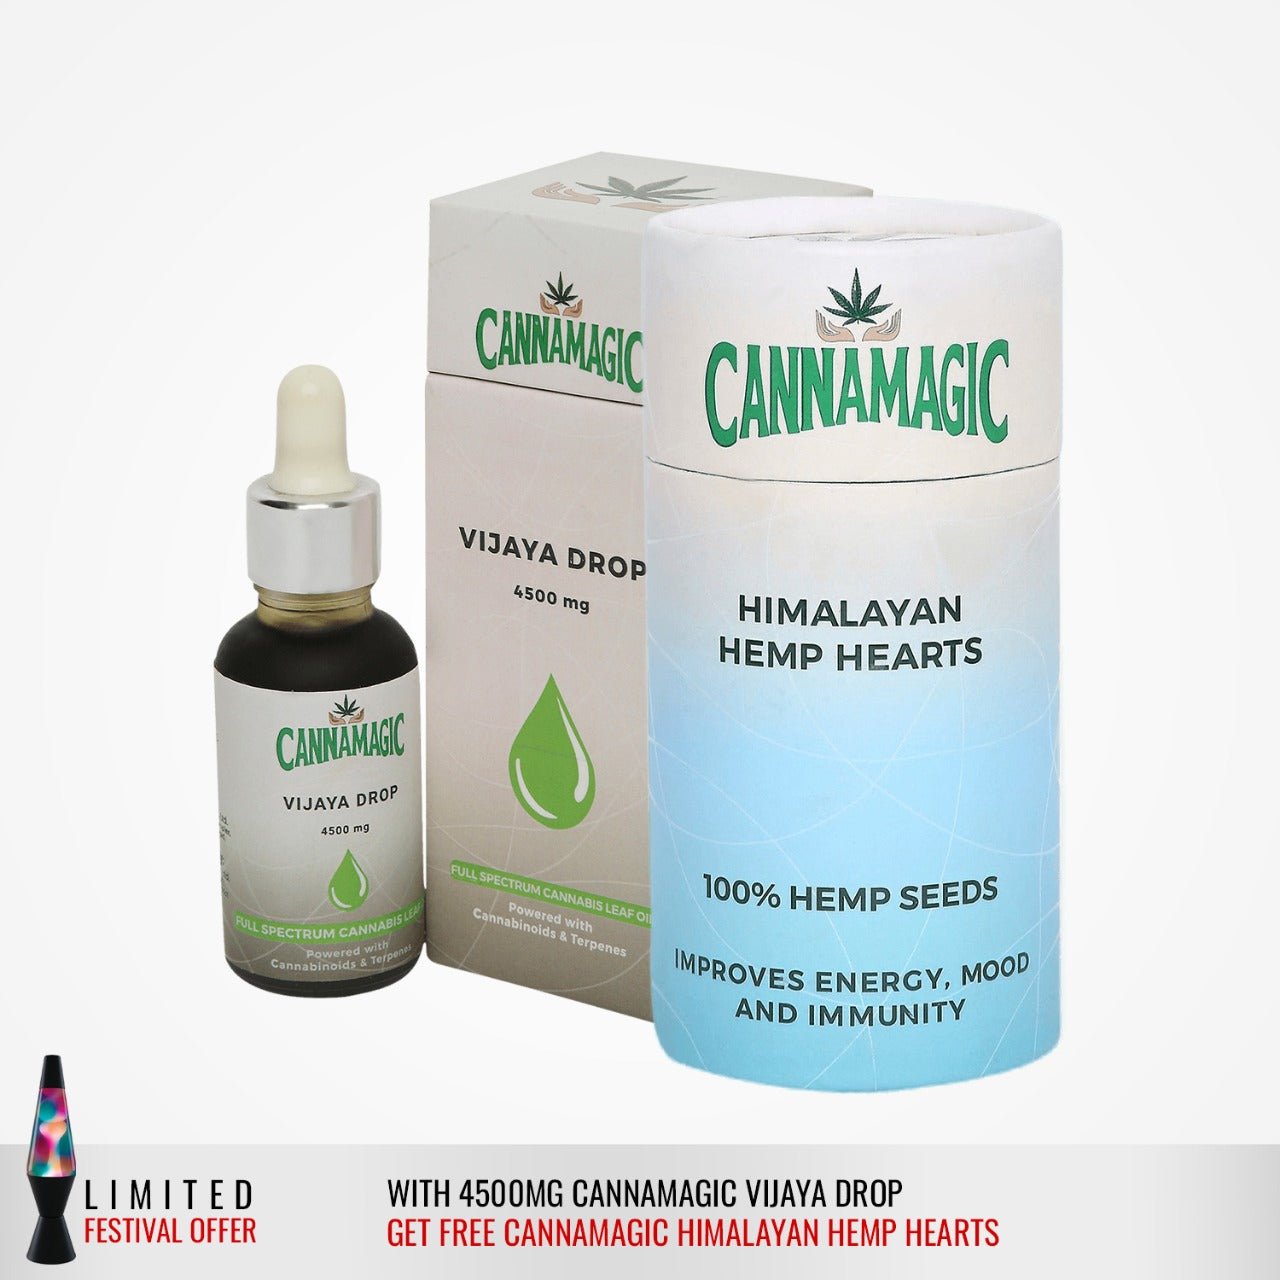 Free Cannamagic Himalayan Hemp Hearts with Cannamagic - Vijaya Drop (4500 mg) - CBD Store India